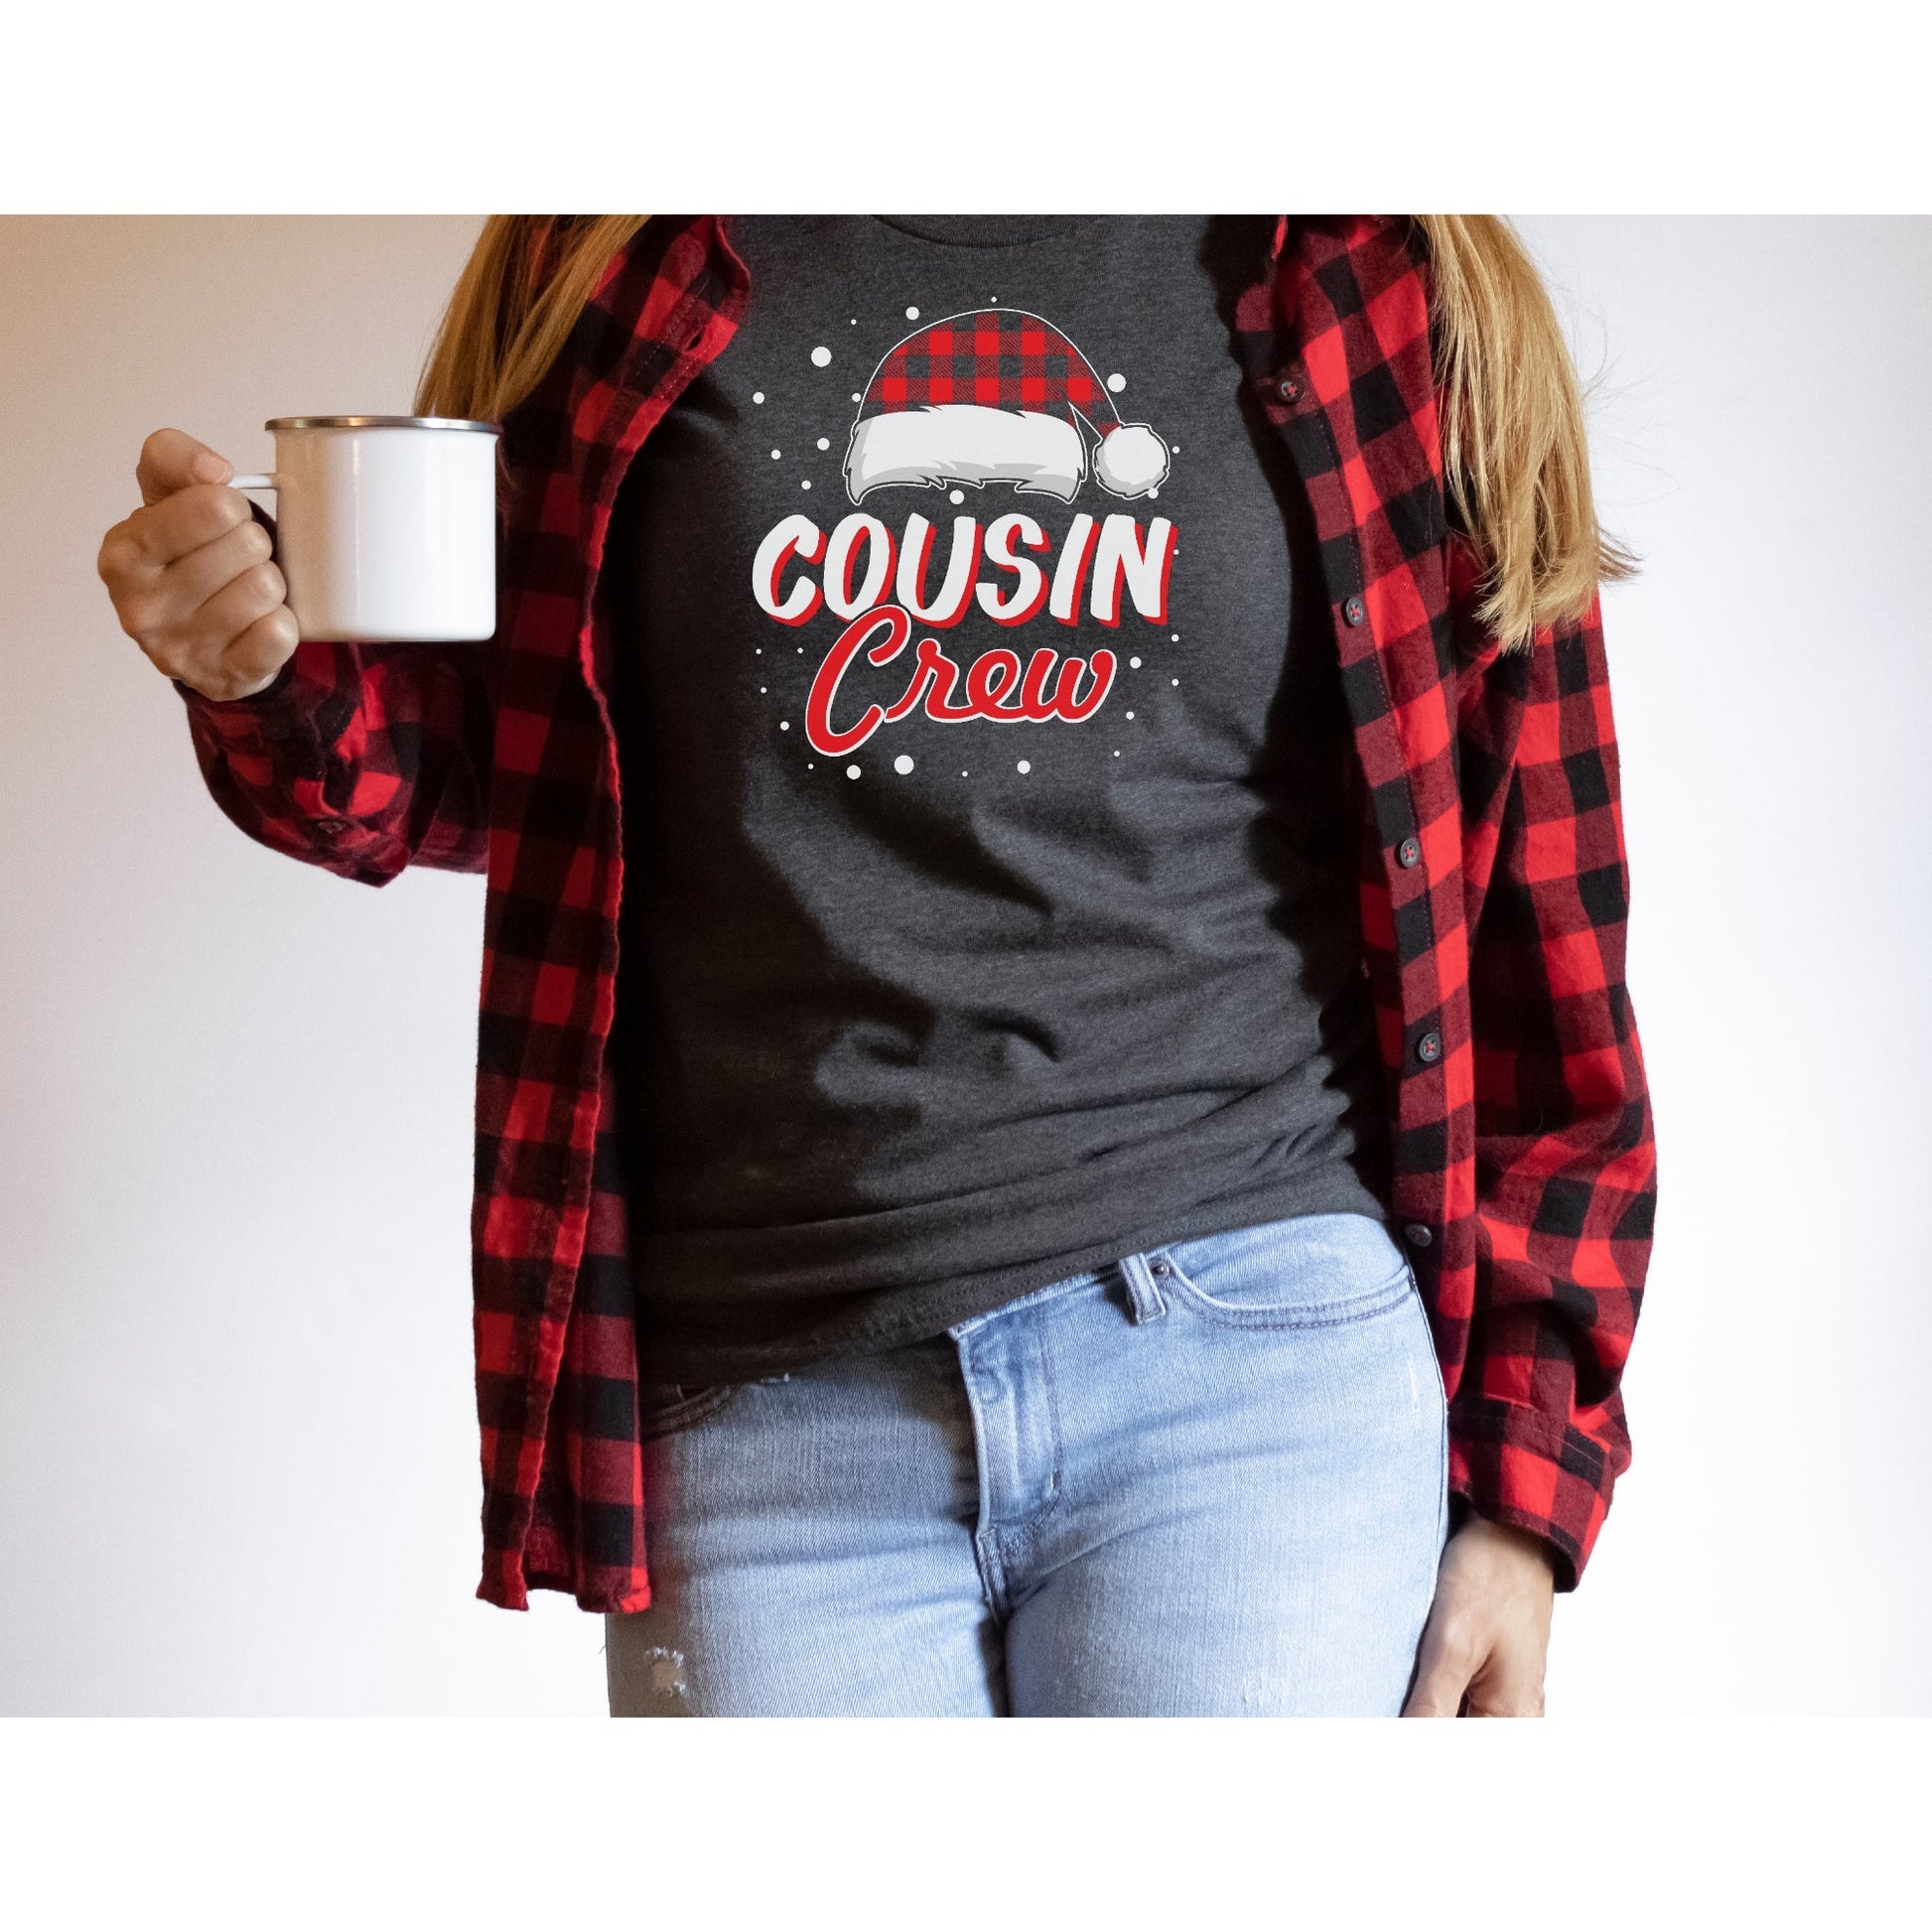 Cousin Crew Christmas T-Shirt - Adult - Premium T-Shirt - Just $19.50! Shop now at Nine Thirty Nine Design